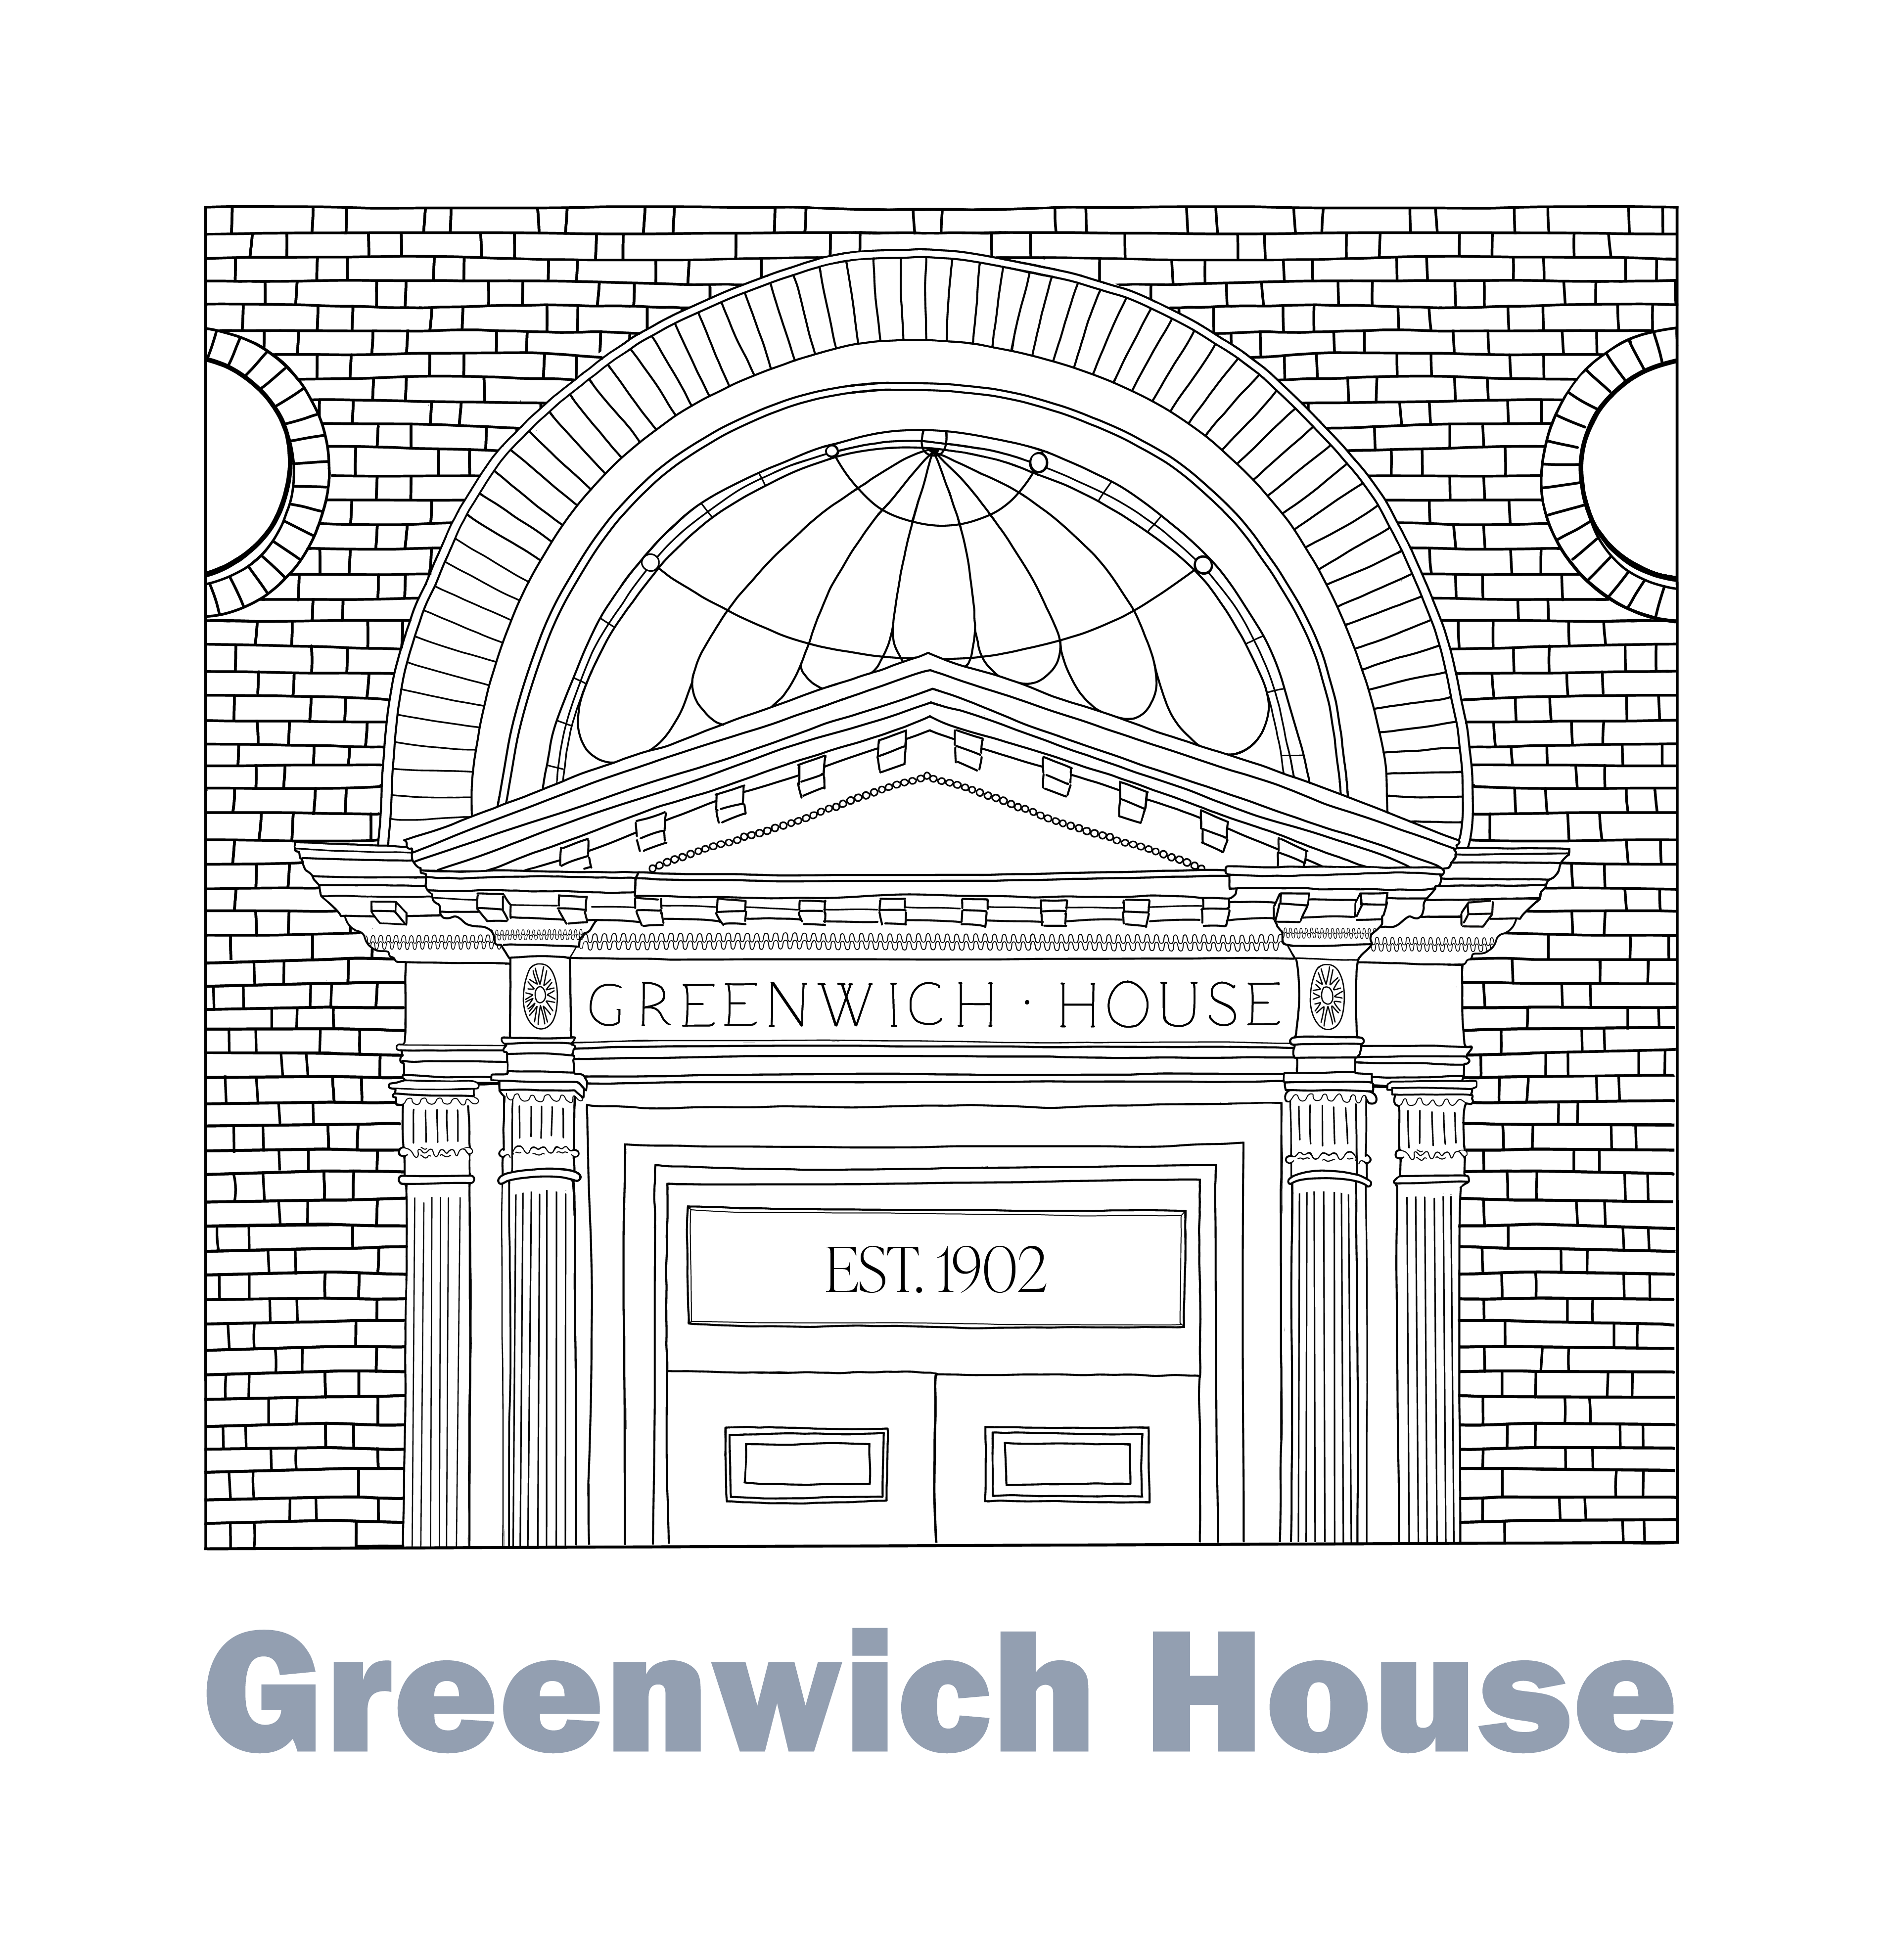 Greenwich House